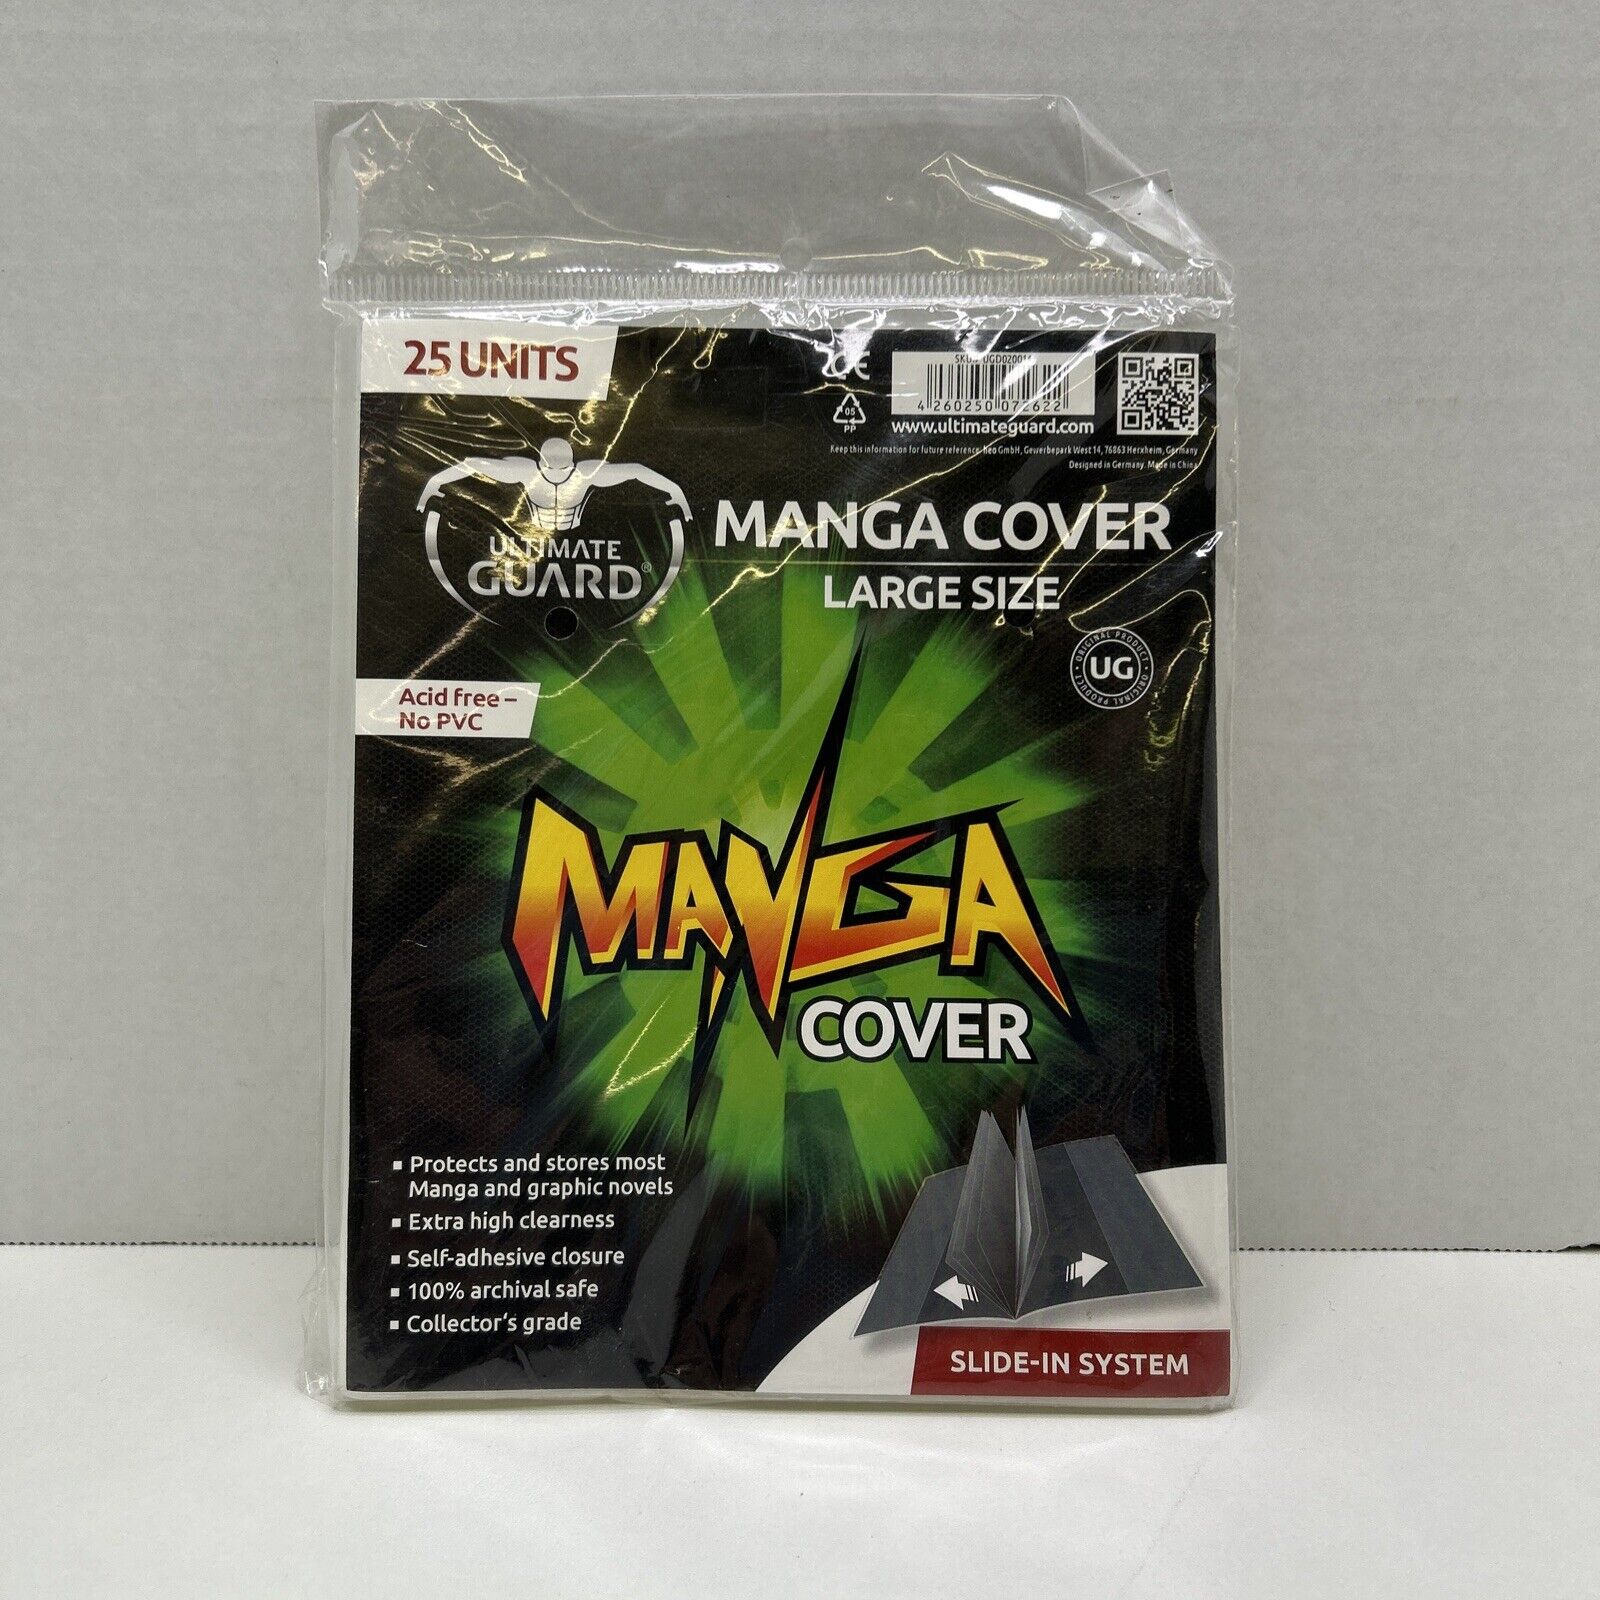 Manga Covers, Large - Ultimate Guard NEW Acid Free No PVC 100% Archival Safe